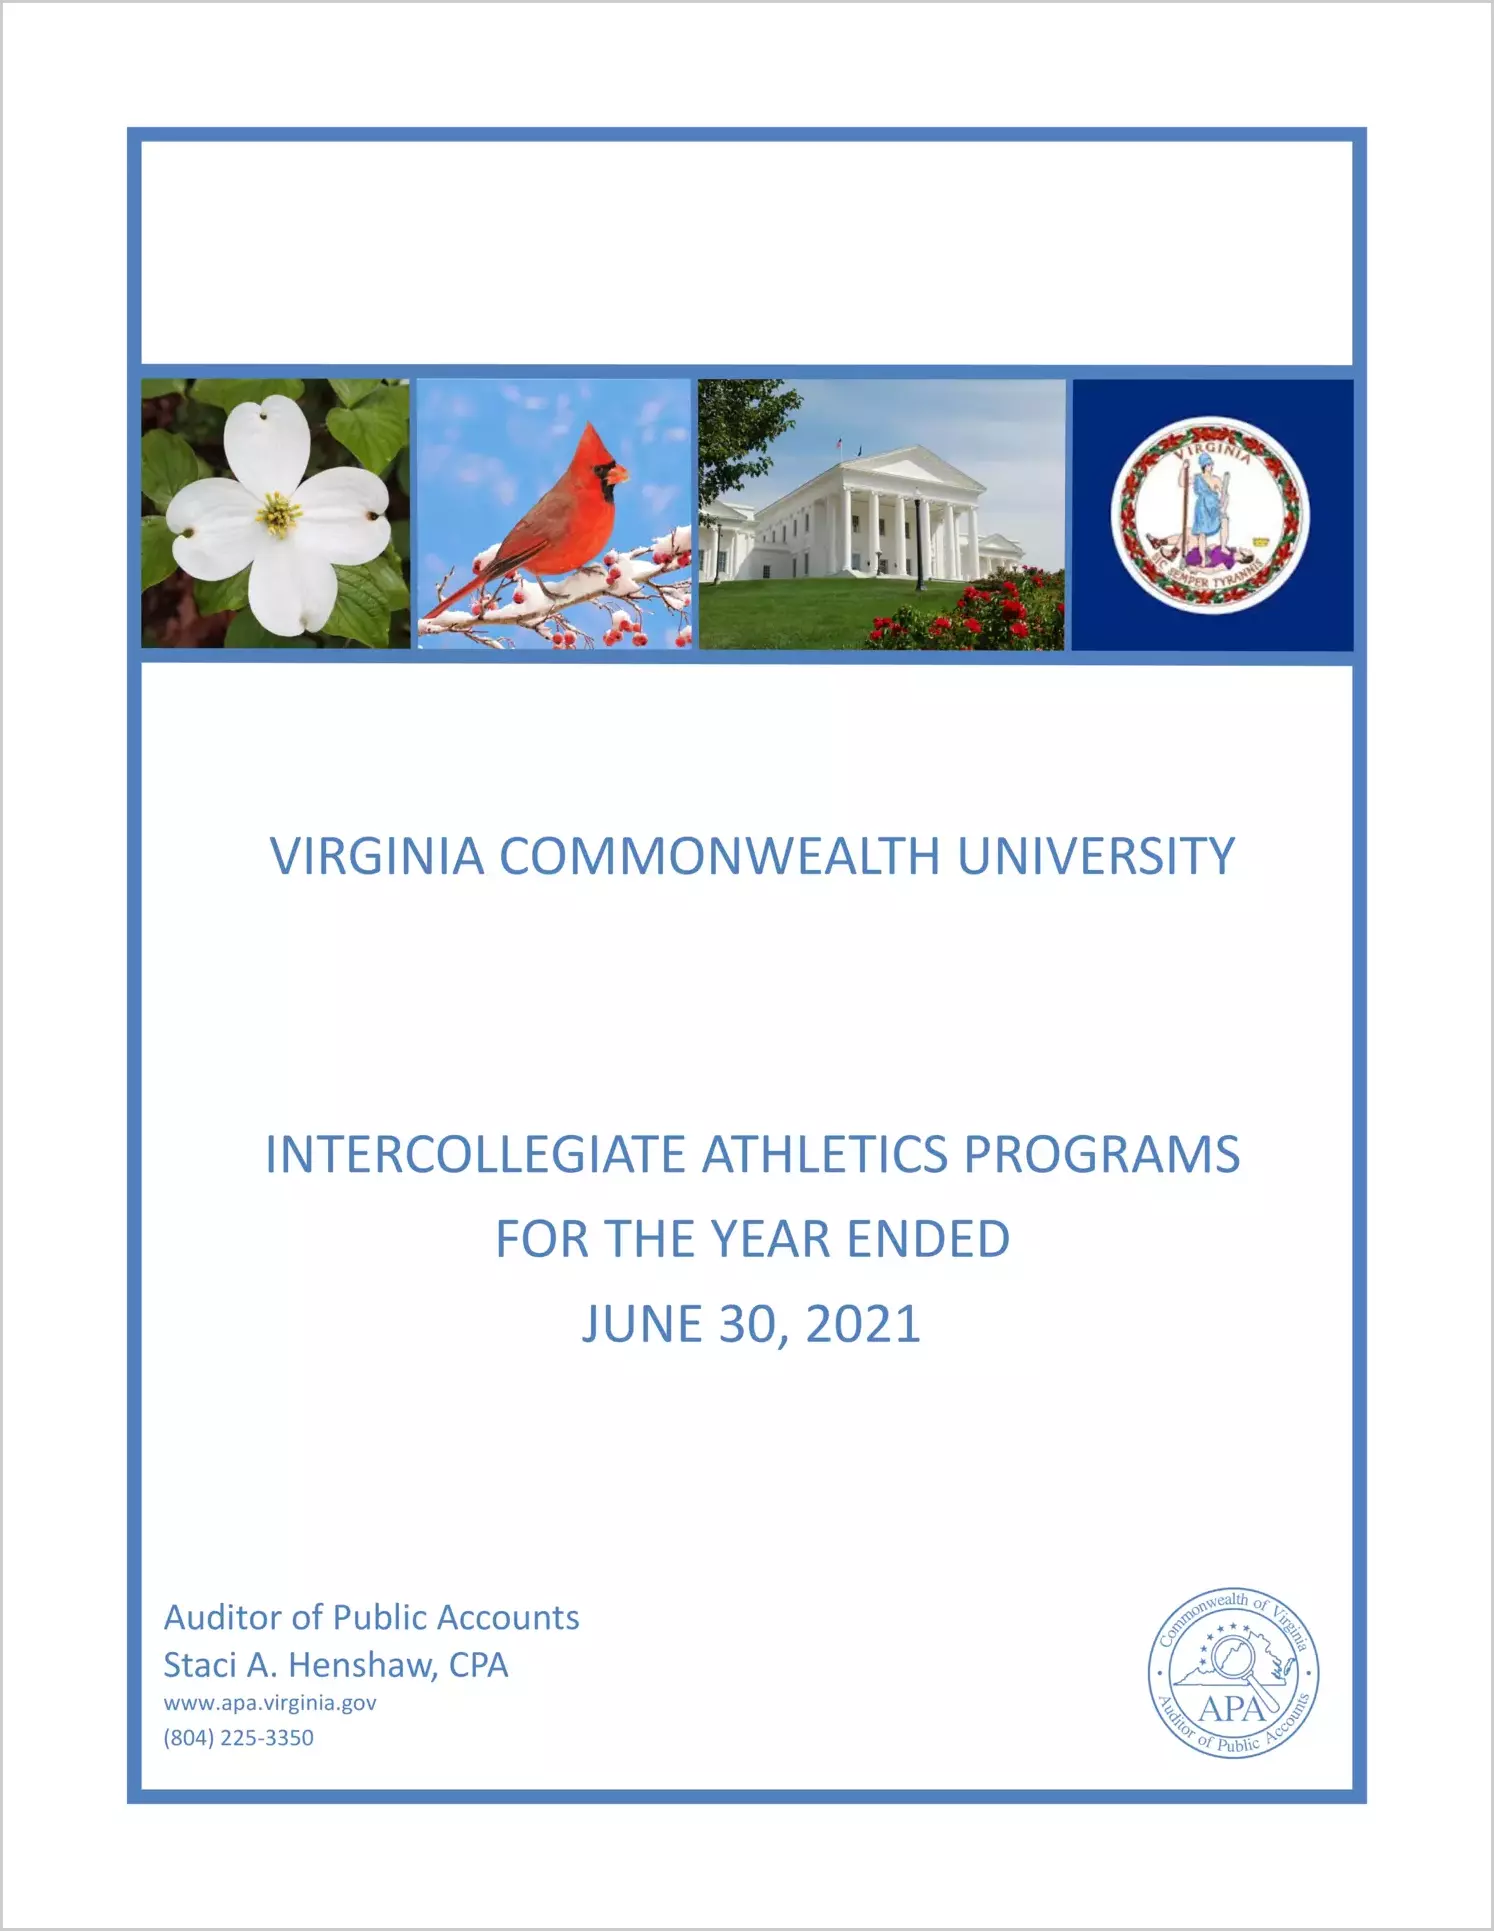 Virginia Commonwealth University Intercollegiate Athletics Programs for the year ended June 30, 2021